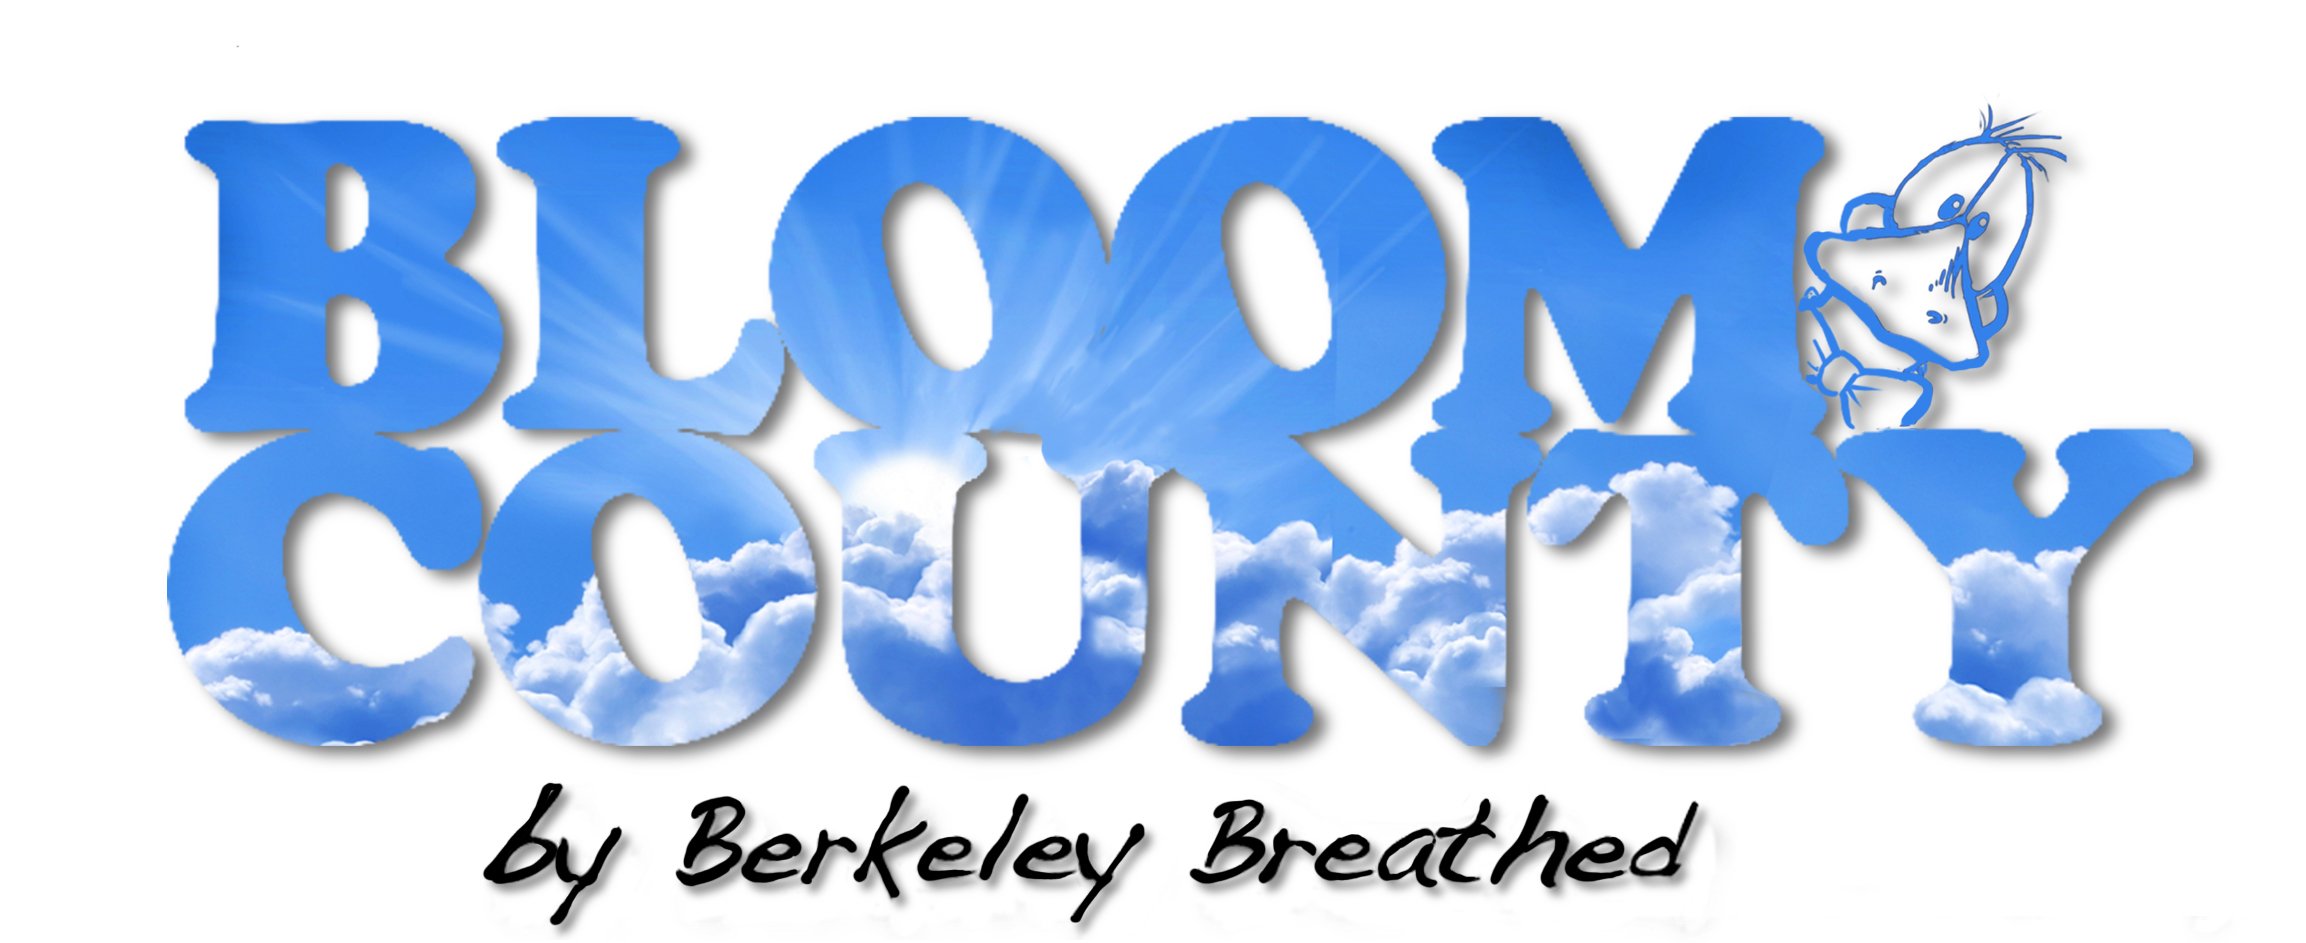 Berkeley Breathed